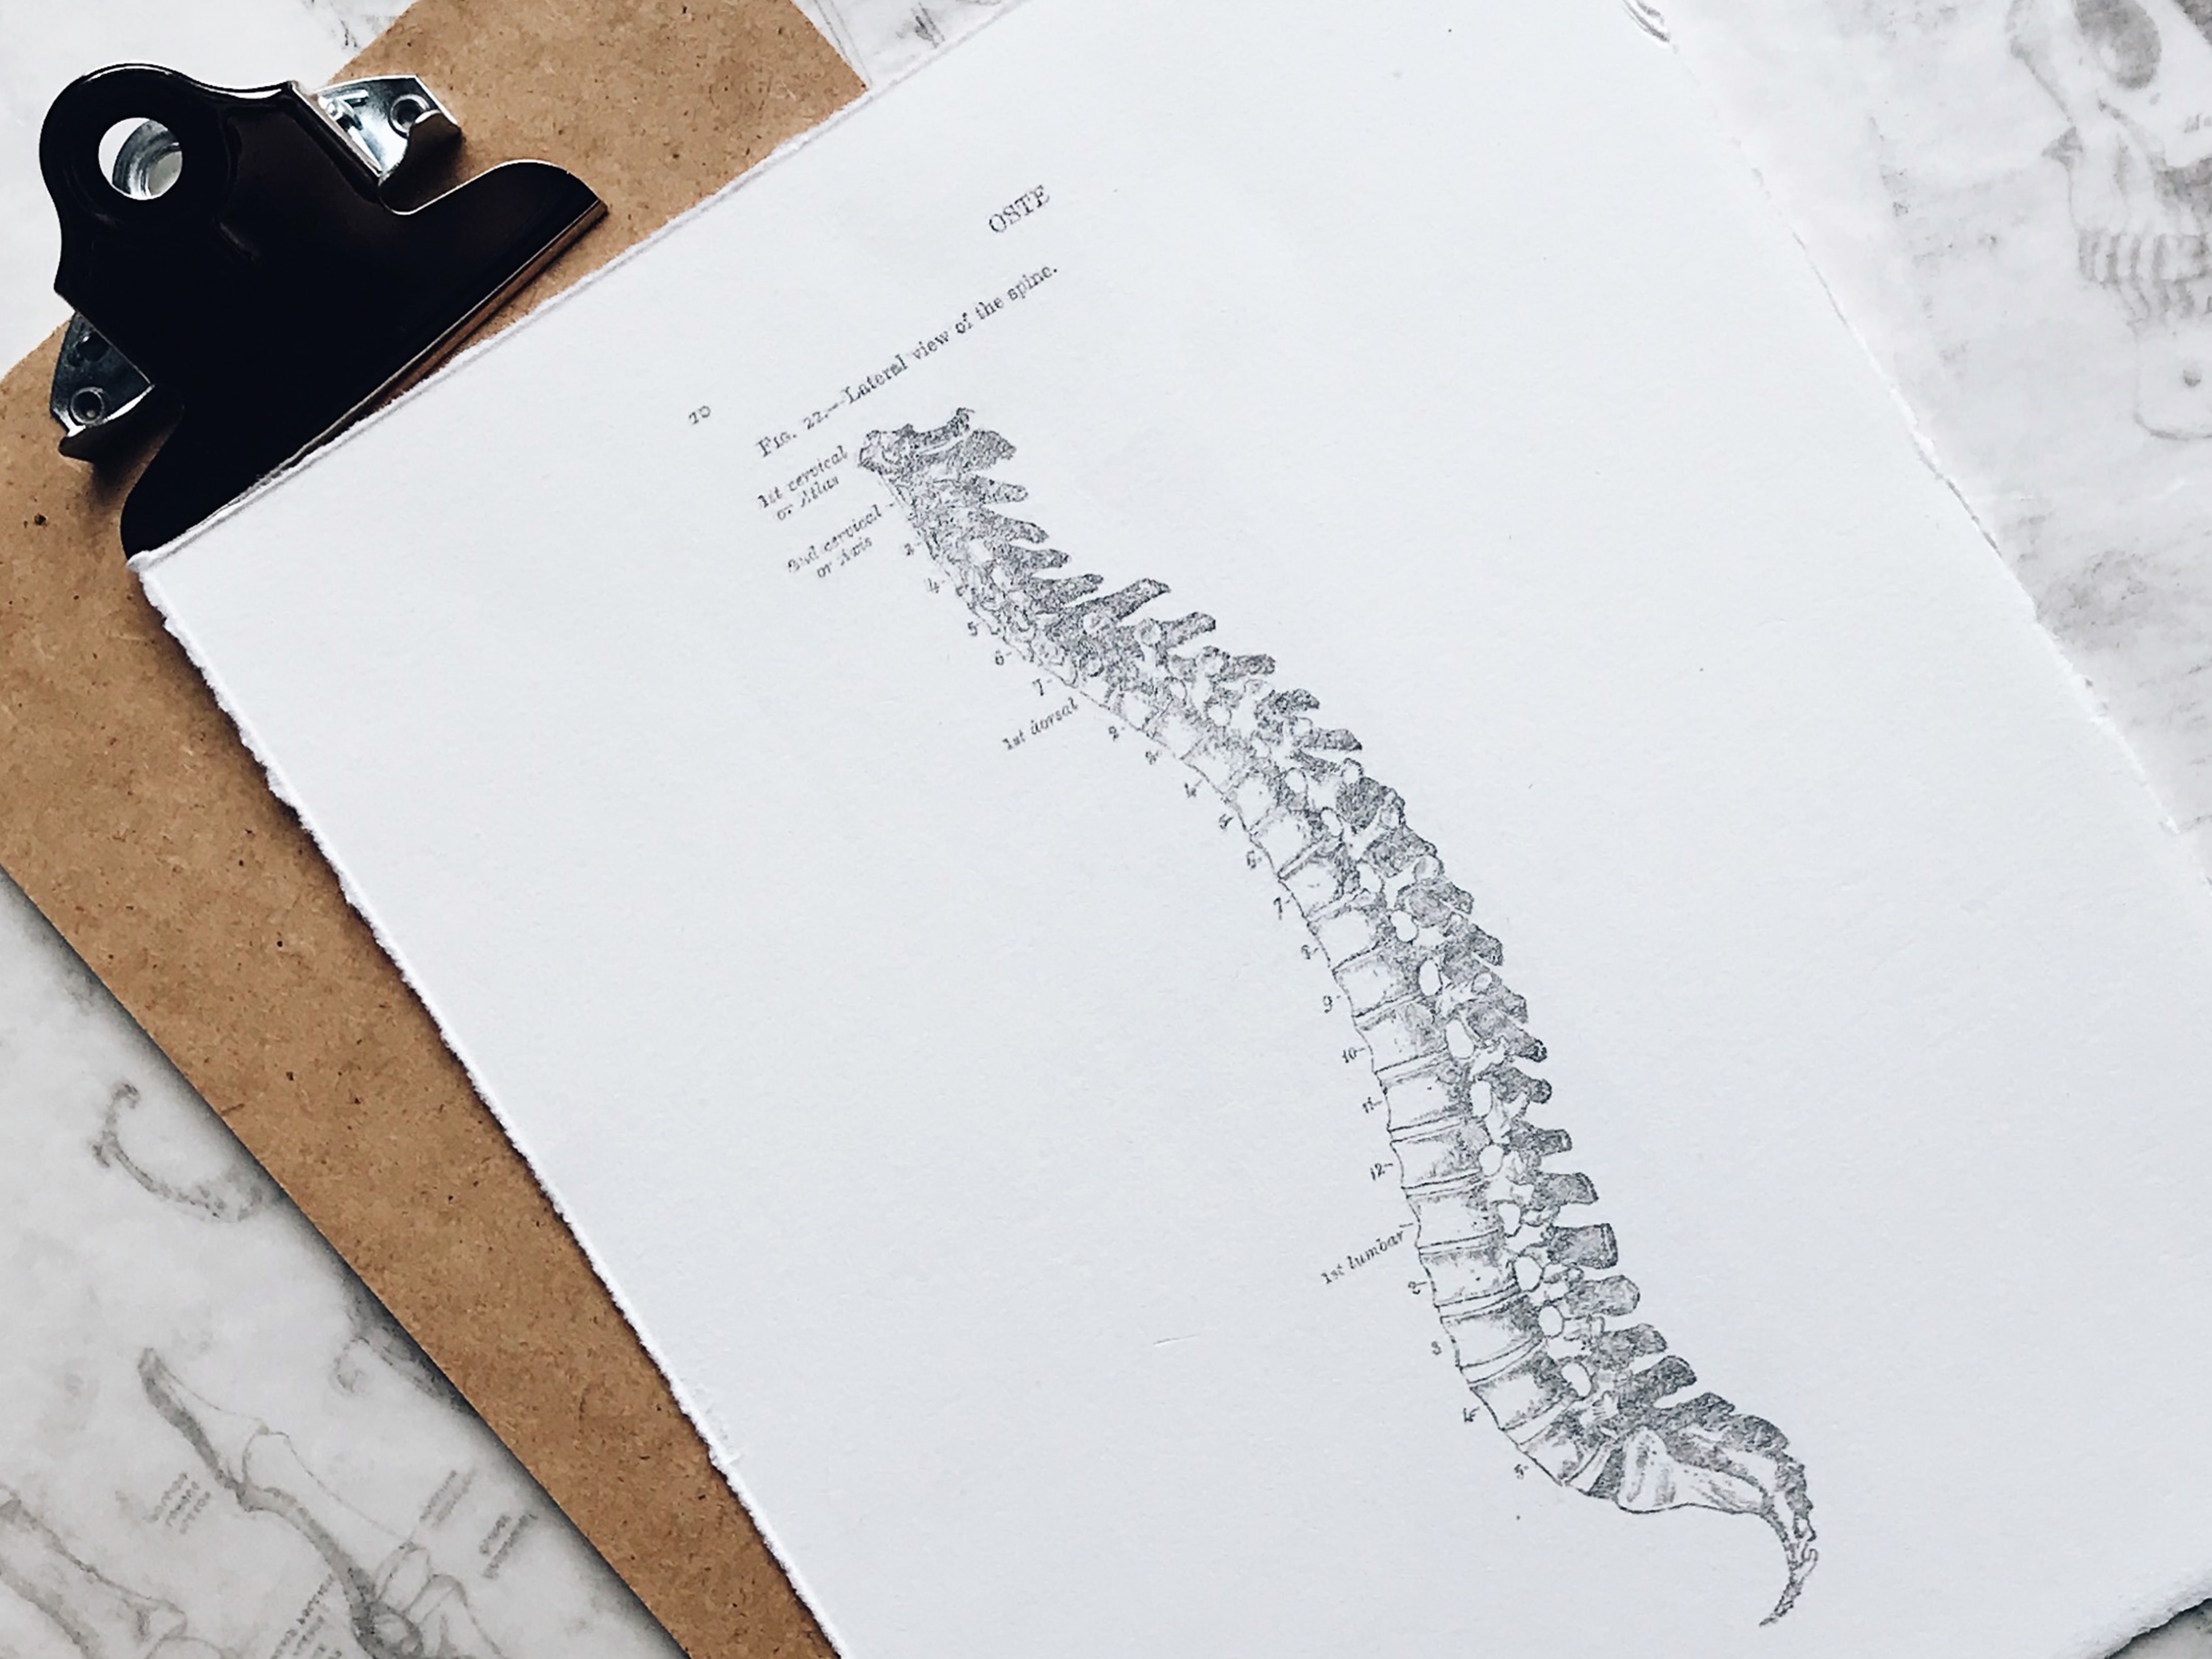 Spinal Cord Injury glossary